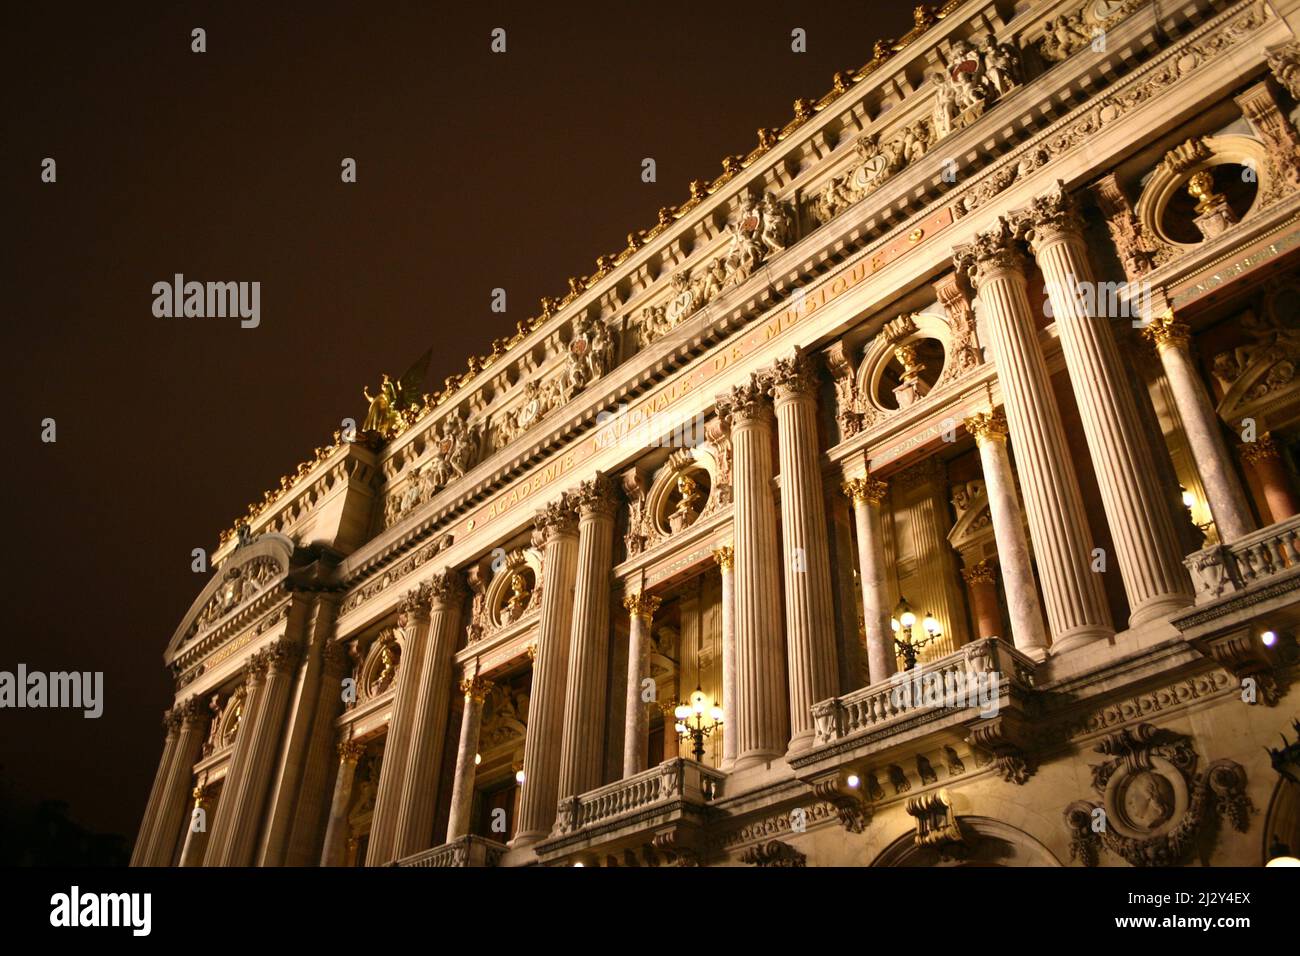 Opera Garnier, Paris Opera House. Low, wide angle night view to the Palais Garnier, home to the Opera National de Paris. Stock Photo